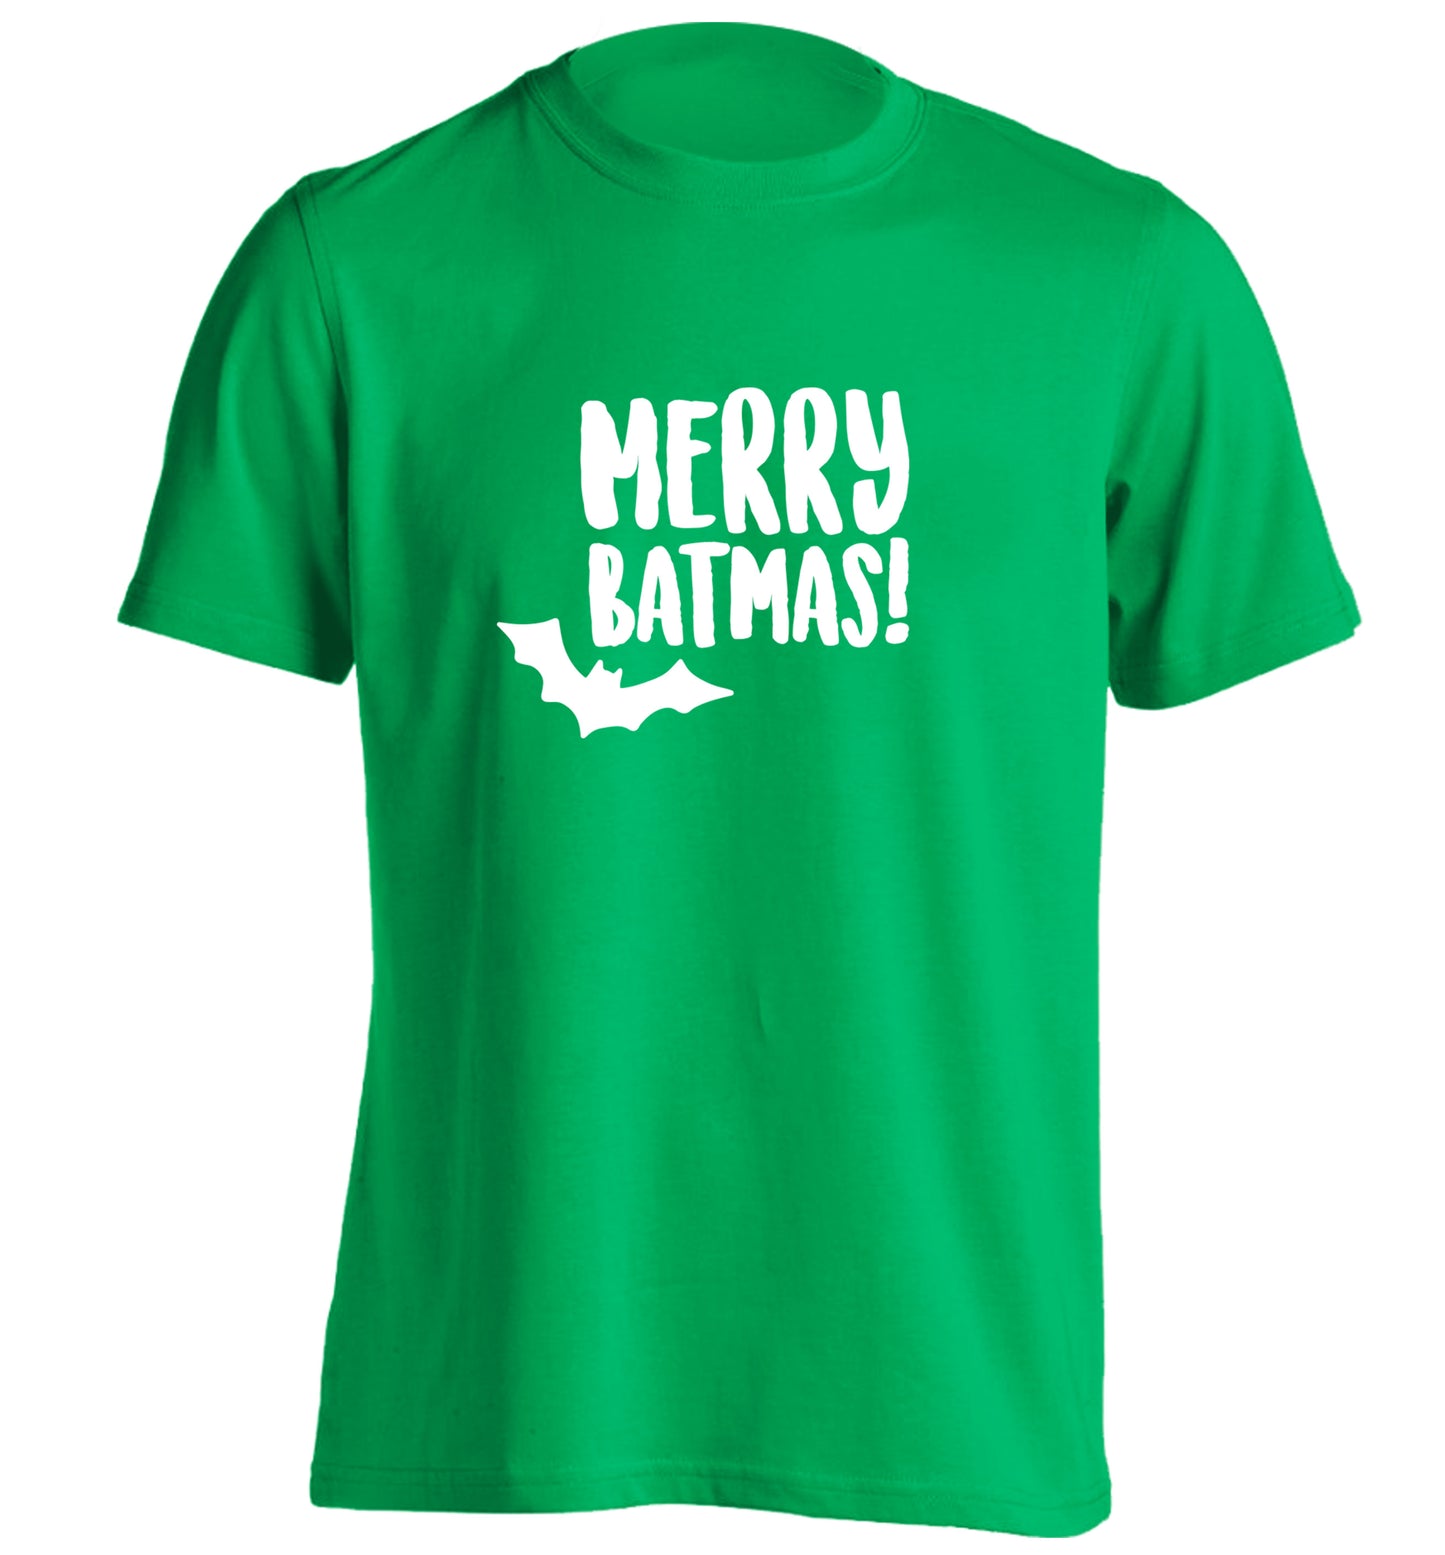 Merry Batmas adults unisex green Tshirt 2XL